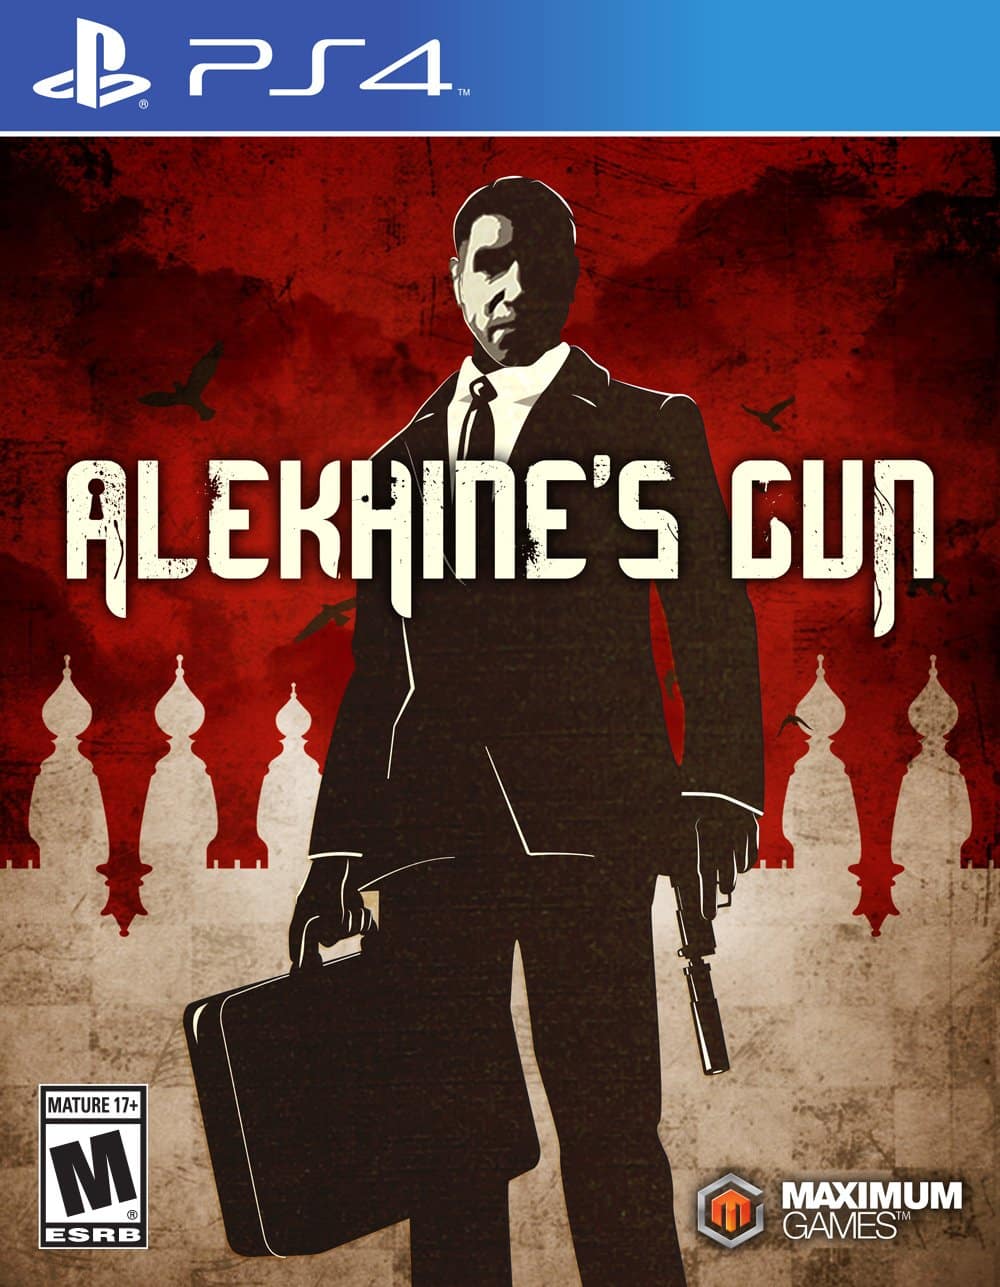 Alekhine’s Gun player count stats